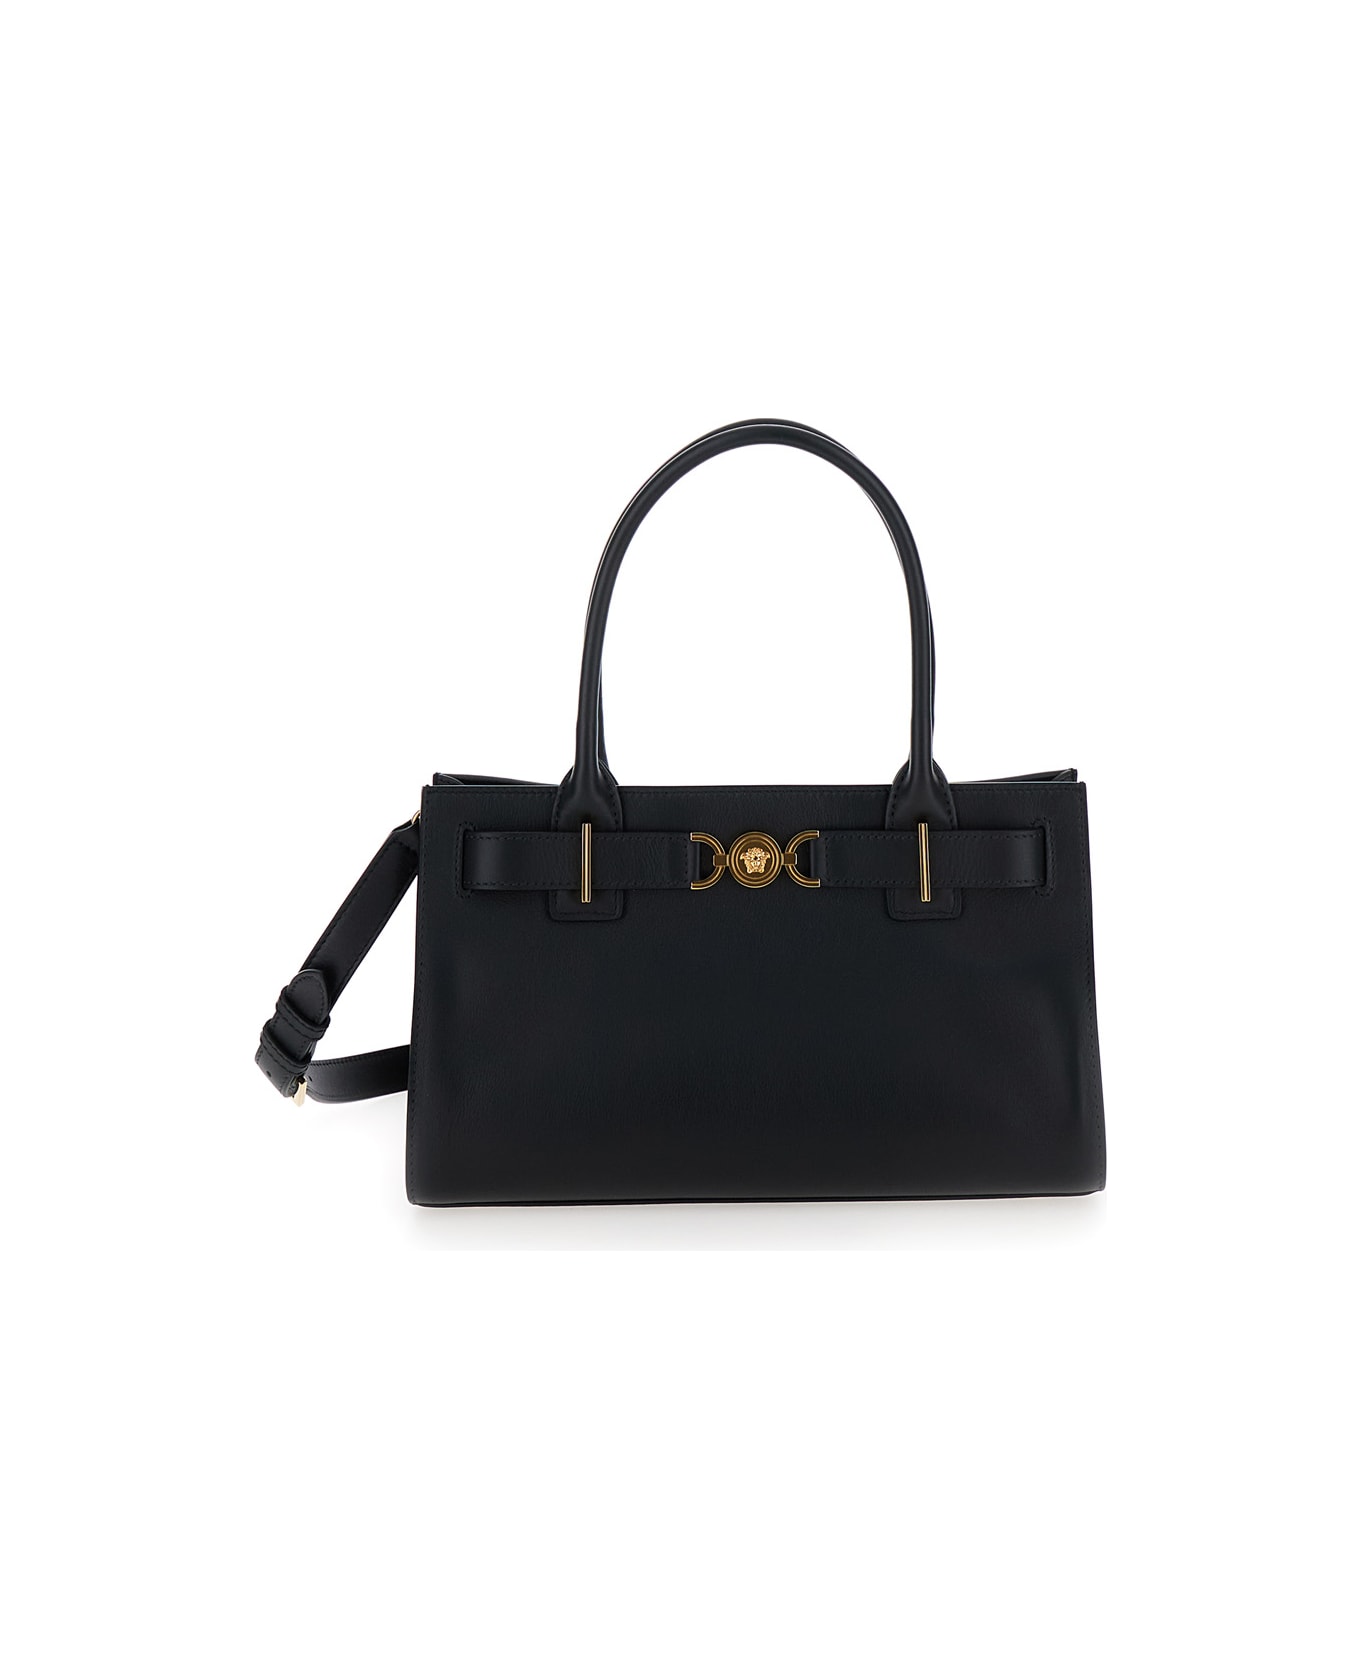 Versace Medusa Shopper Bag '95 - Black versace gold